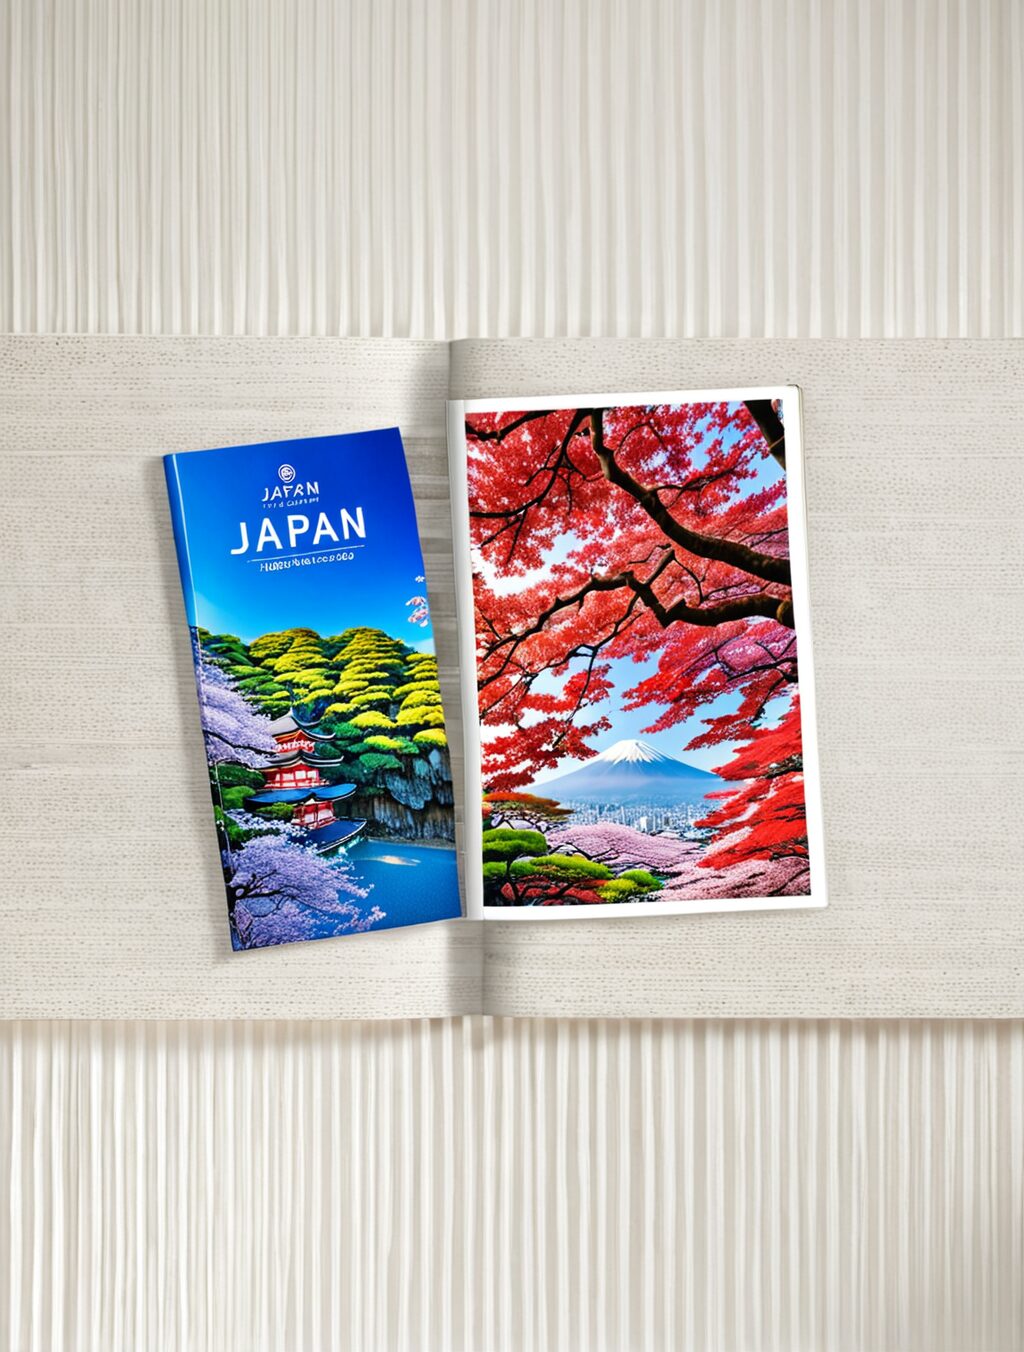 japan travel book 2022